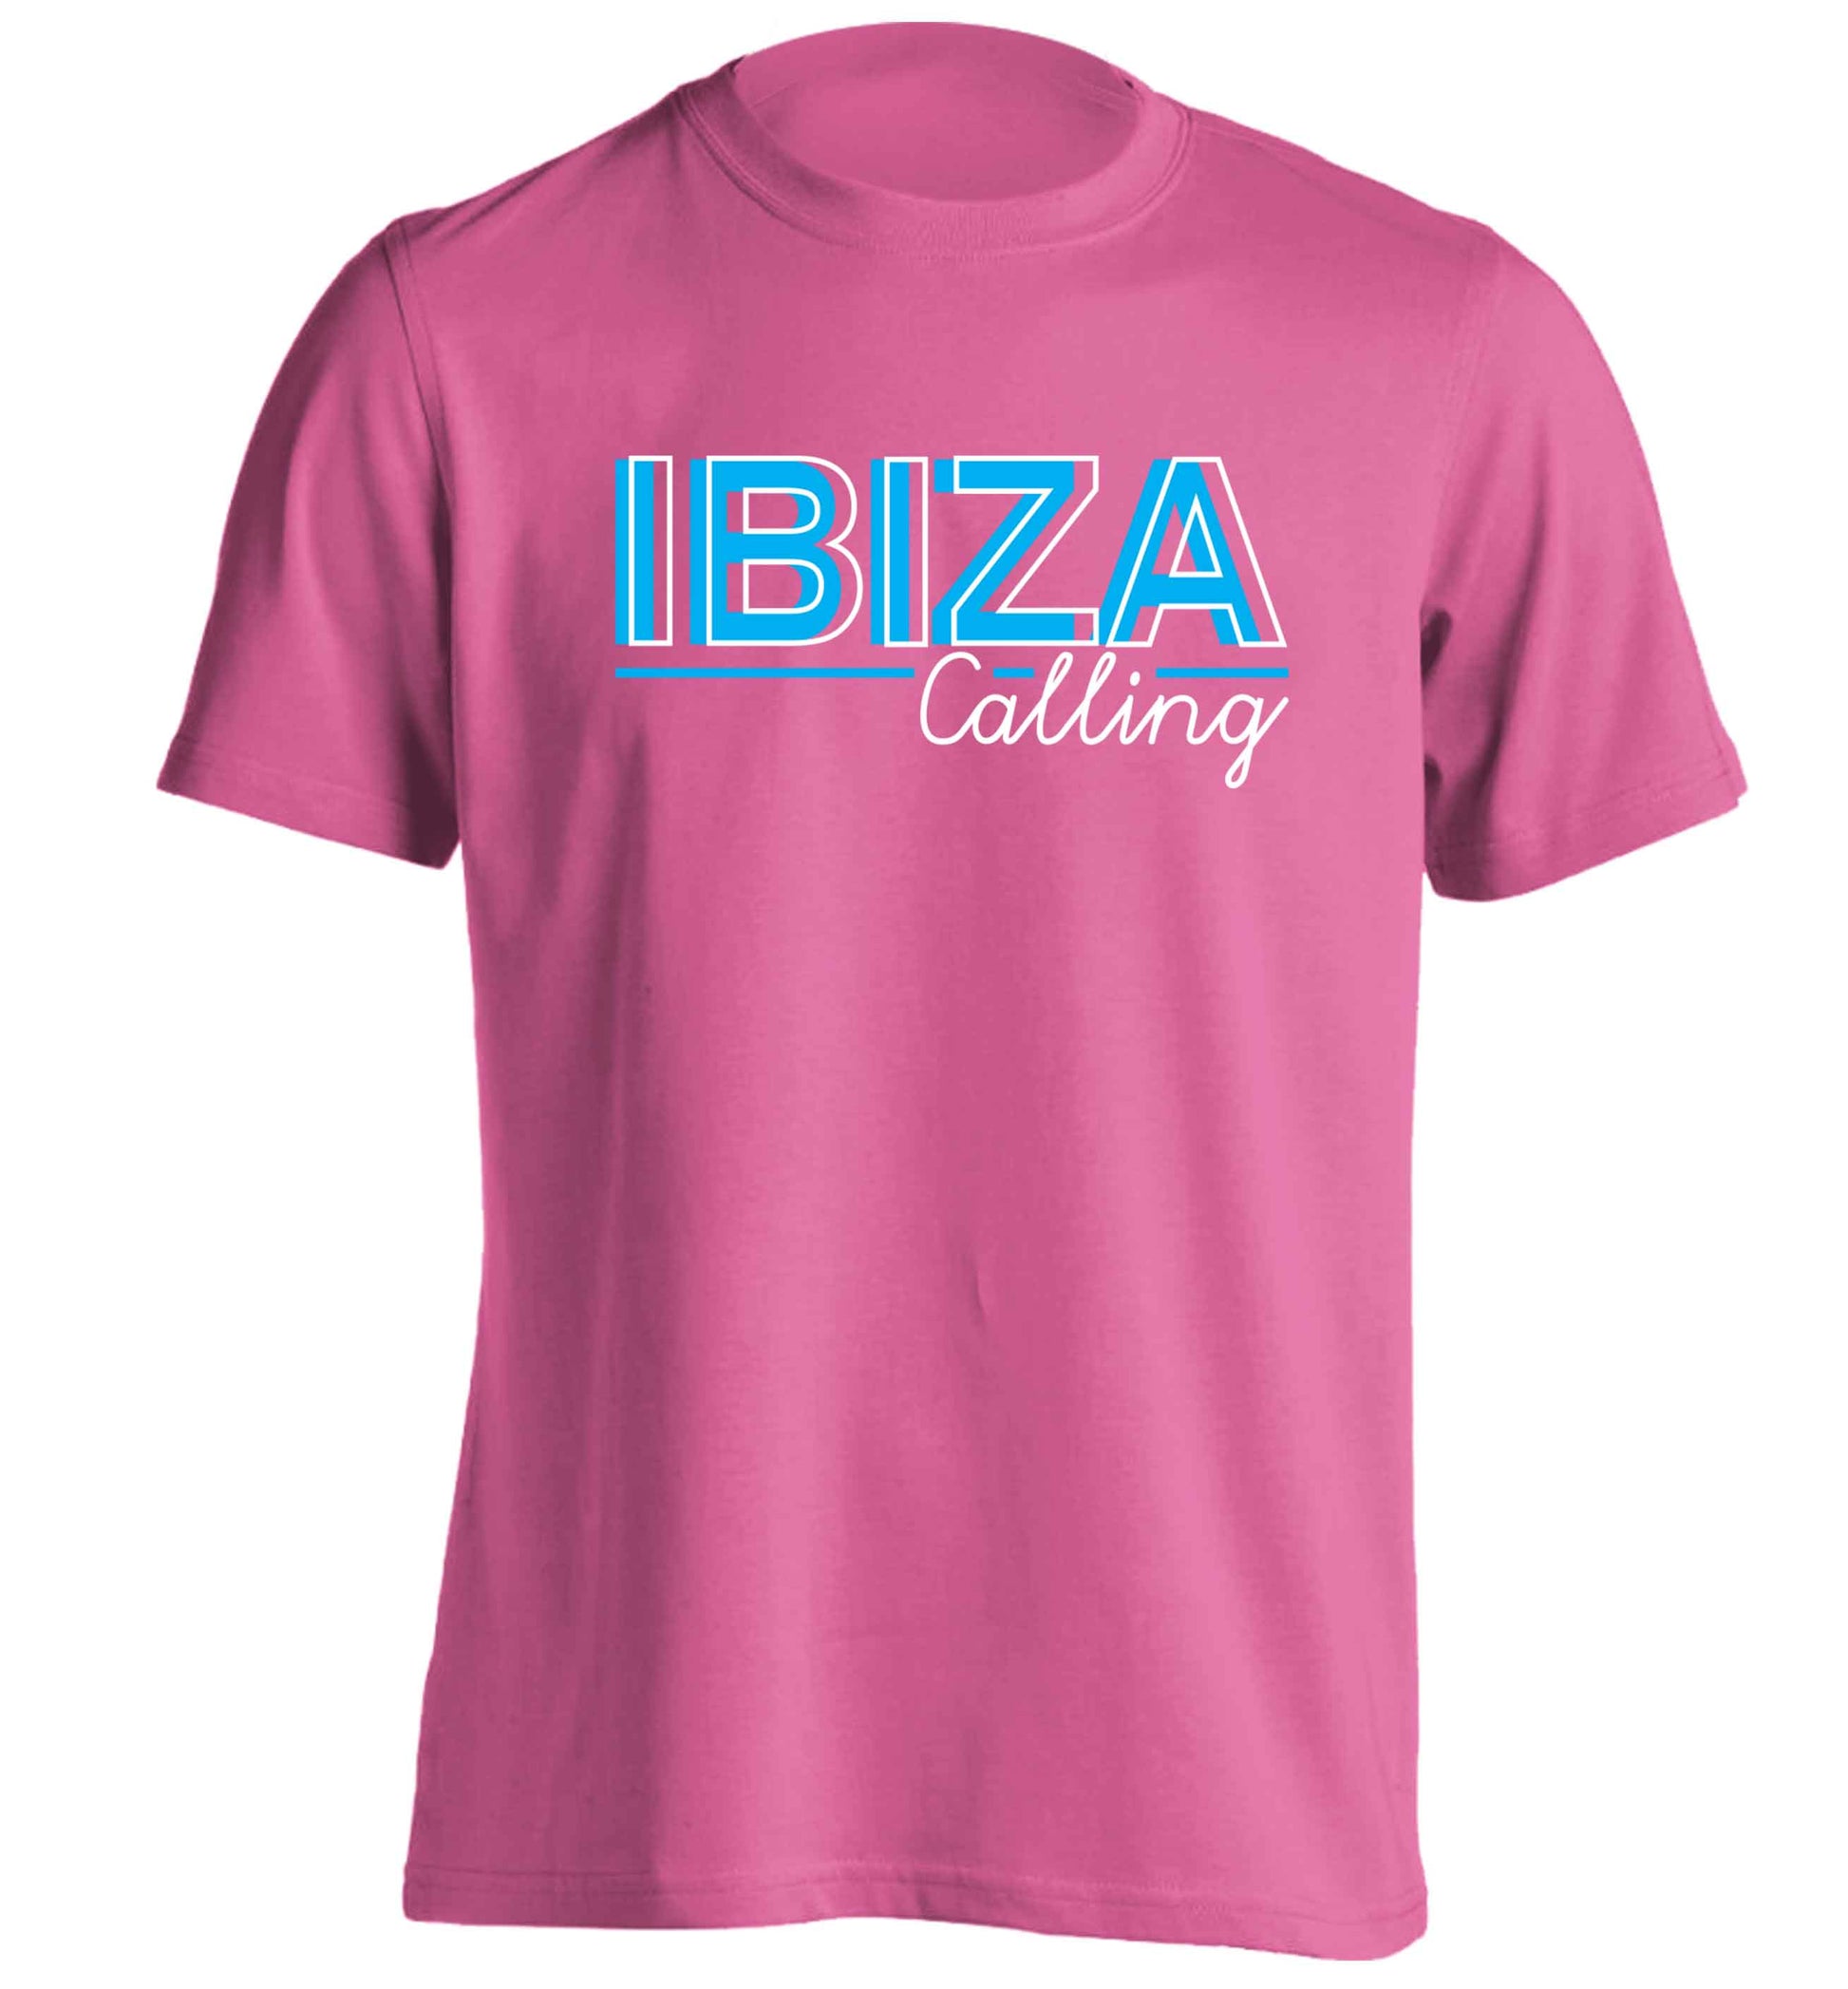 Ibiza calling adults unisex pink Tshirt 2XL